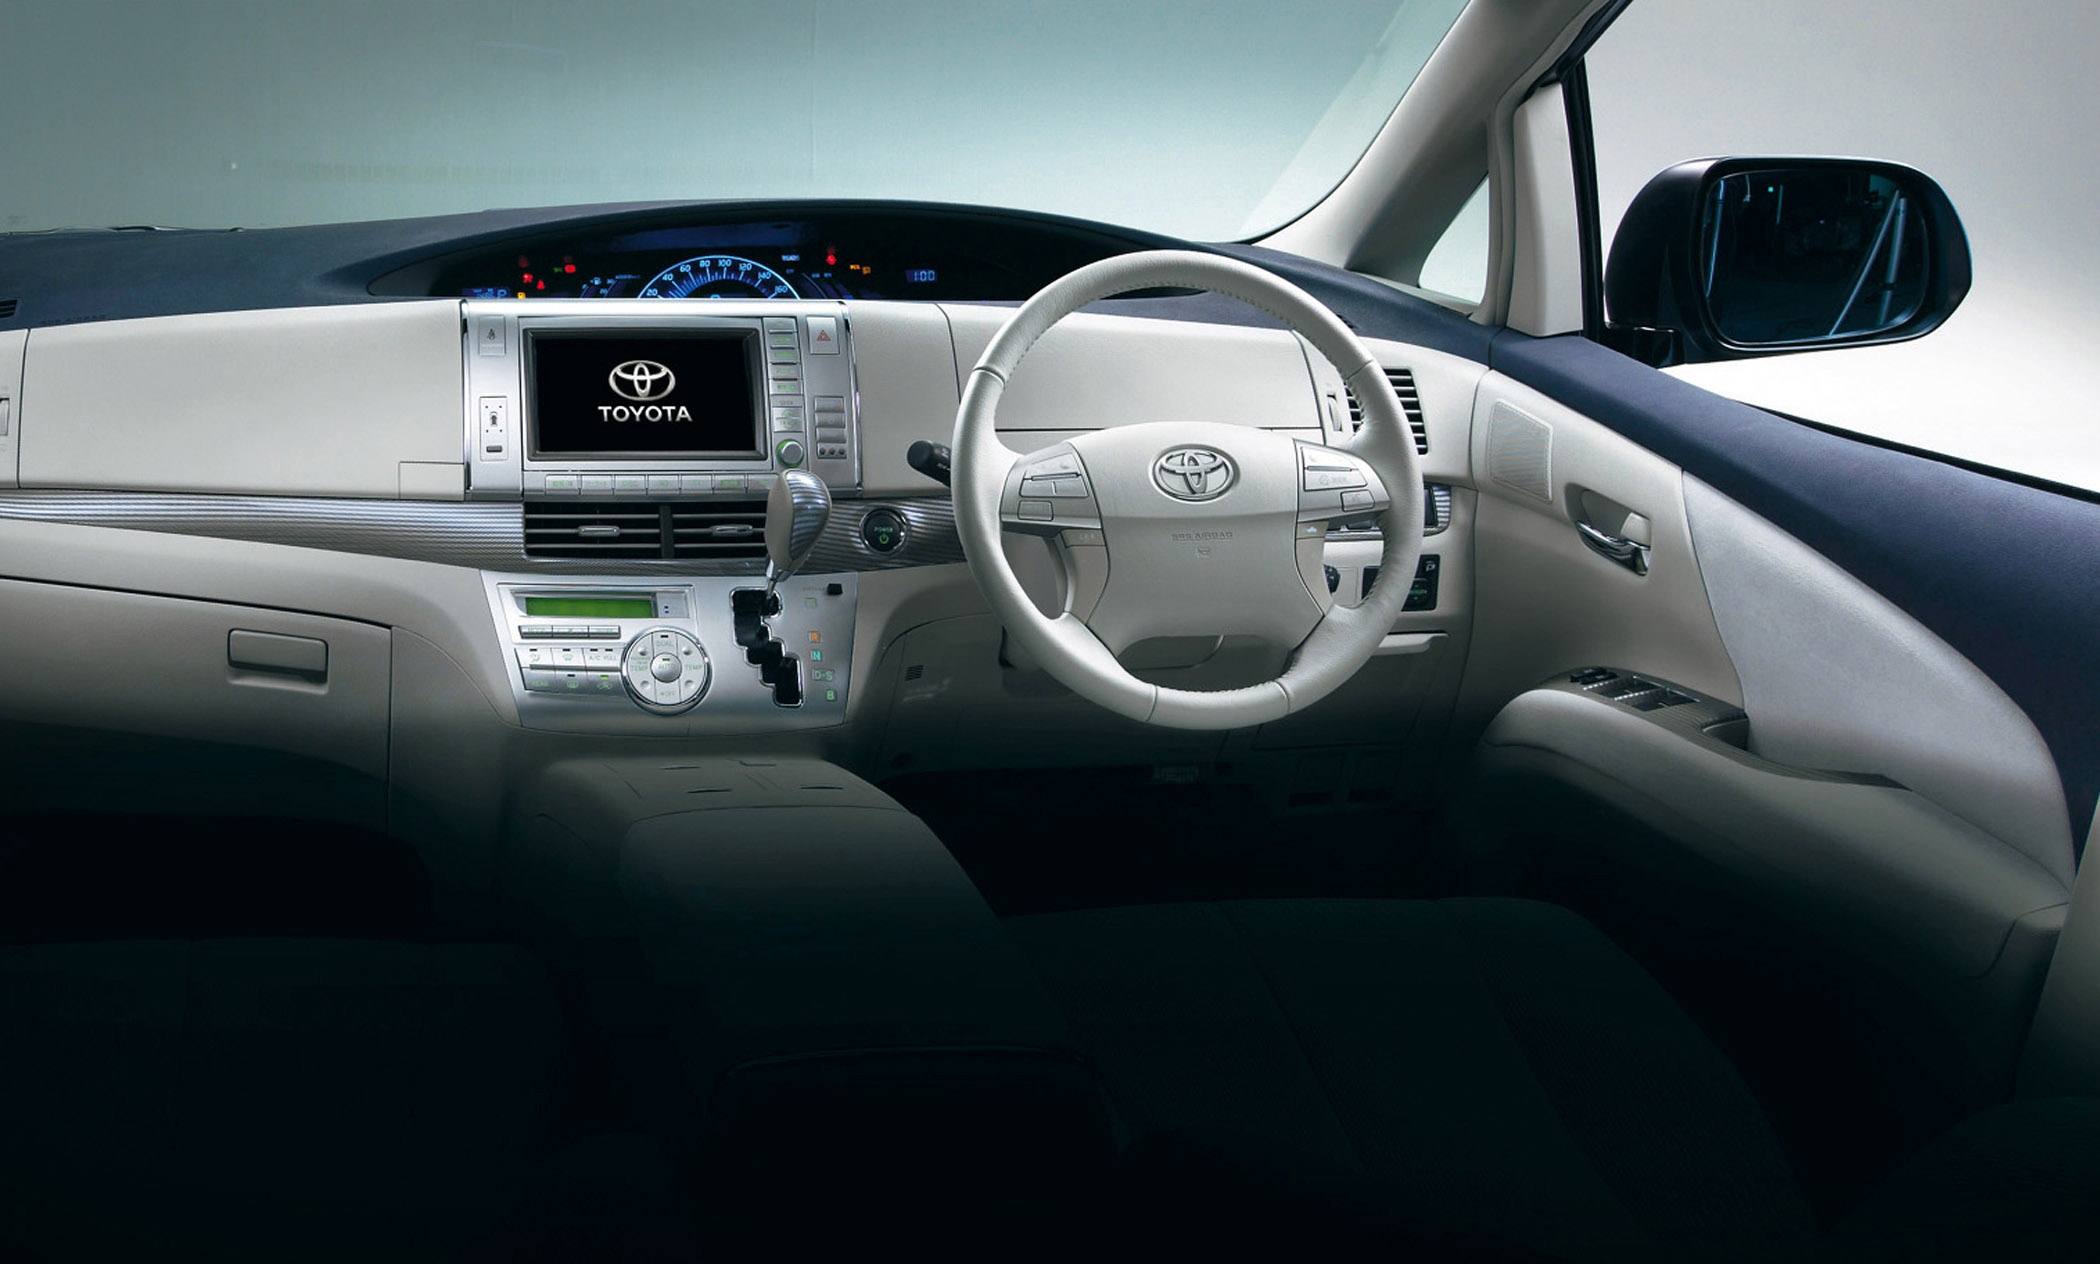 Toyota Estima Hybrid Concept